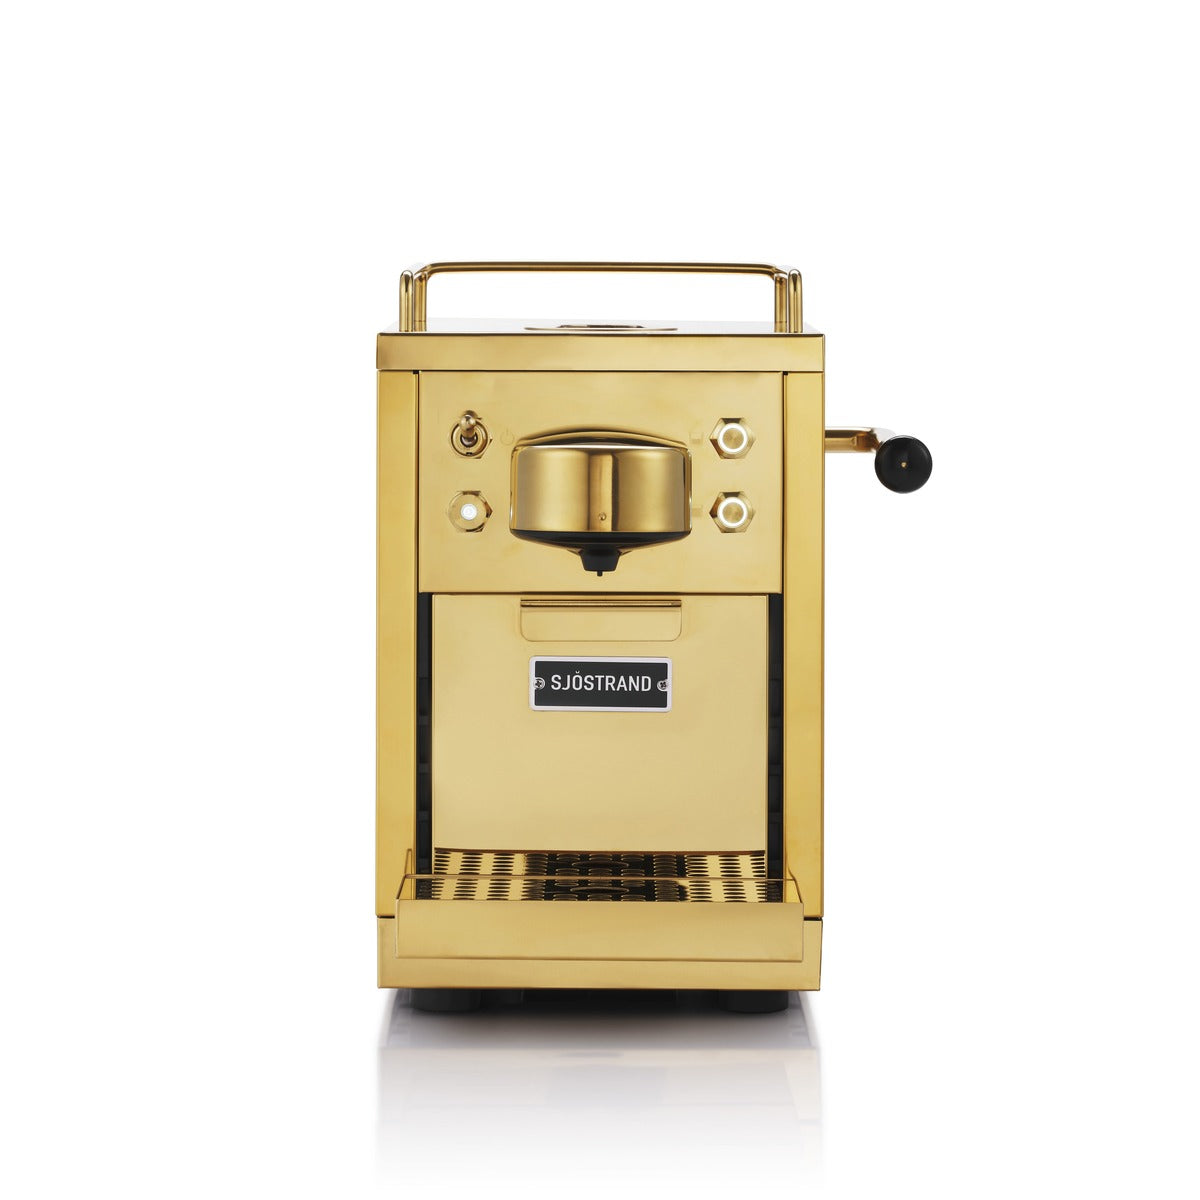 Sjöstrand Espresso Capsule Machine, Brass